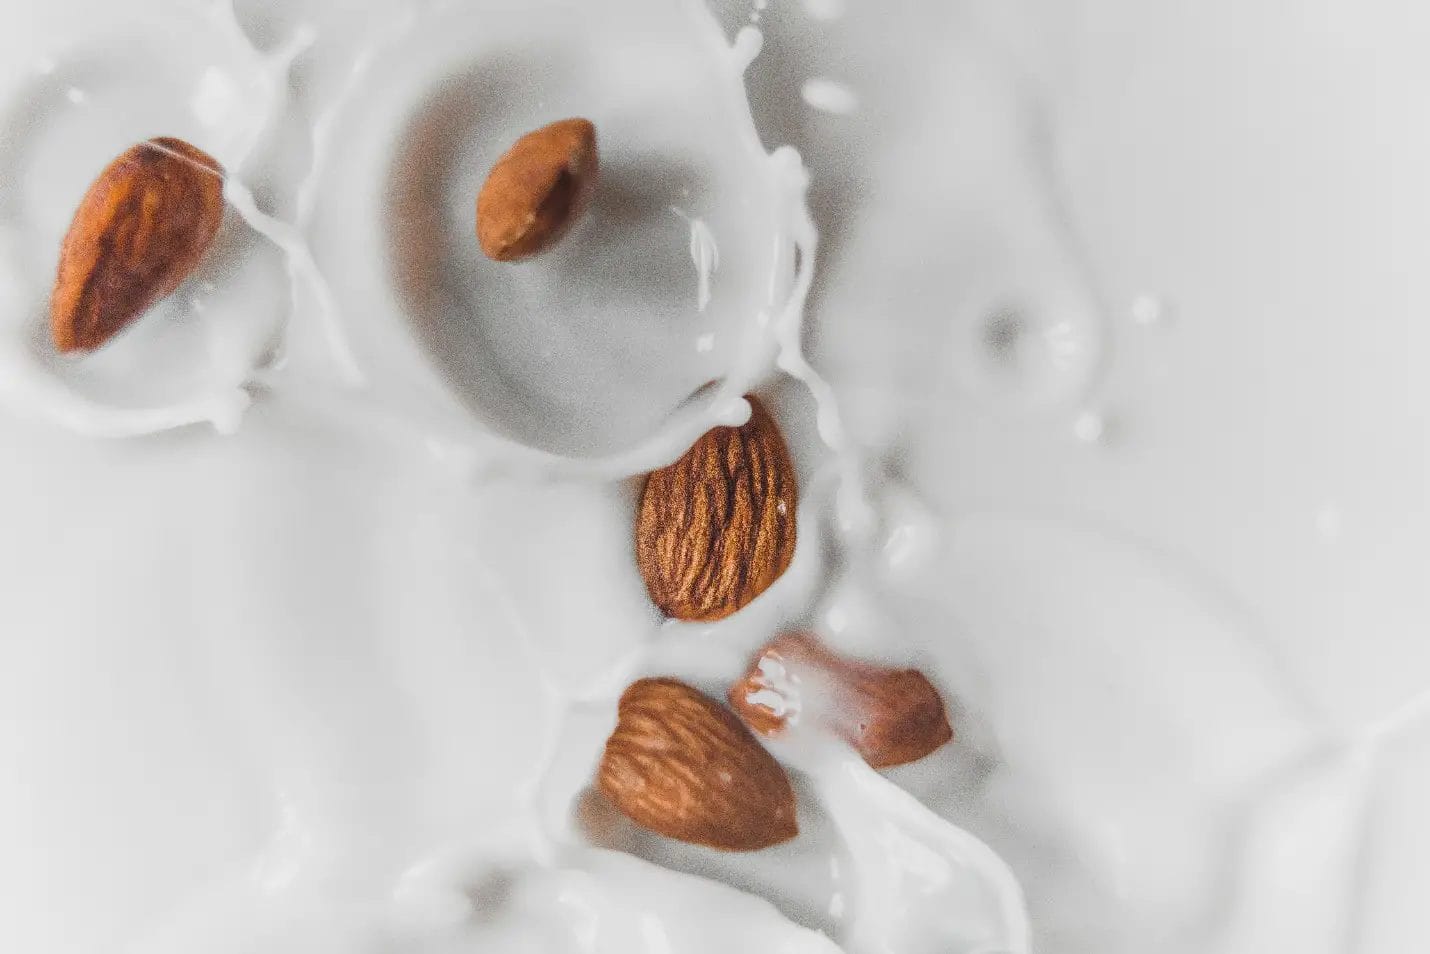 How to prepare fresh almond milk?